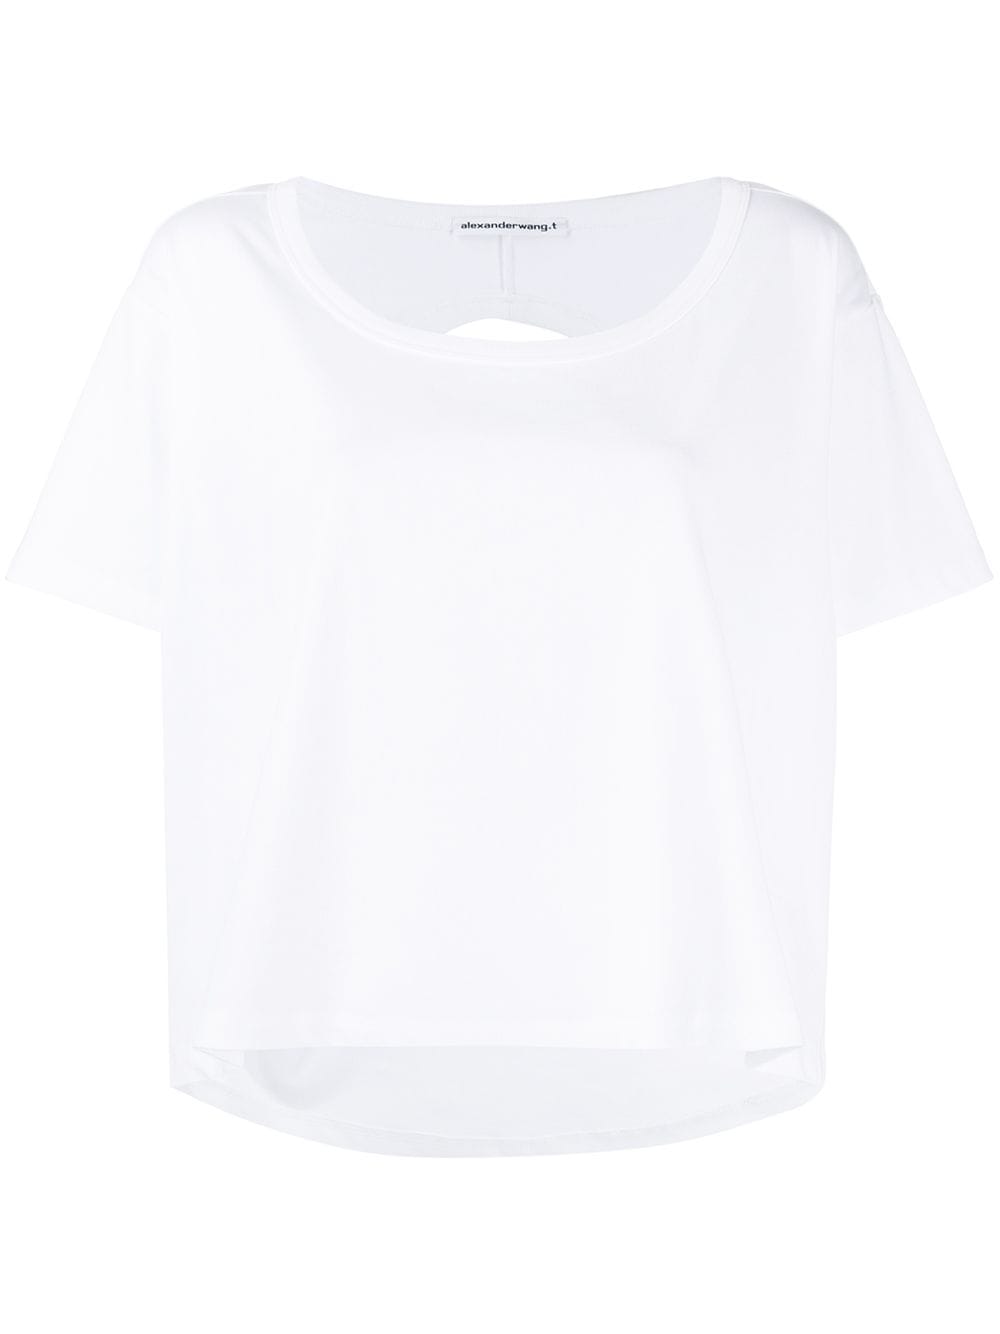 Alexander Wang loose-fit Plain T-shirt - Farfetch